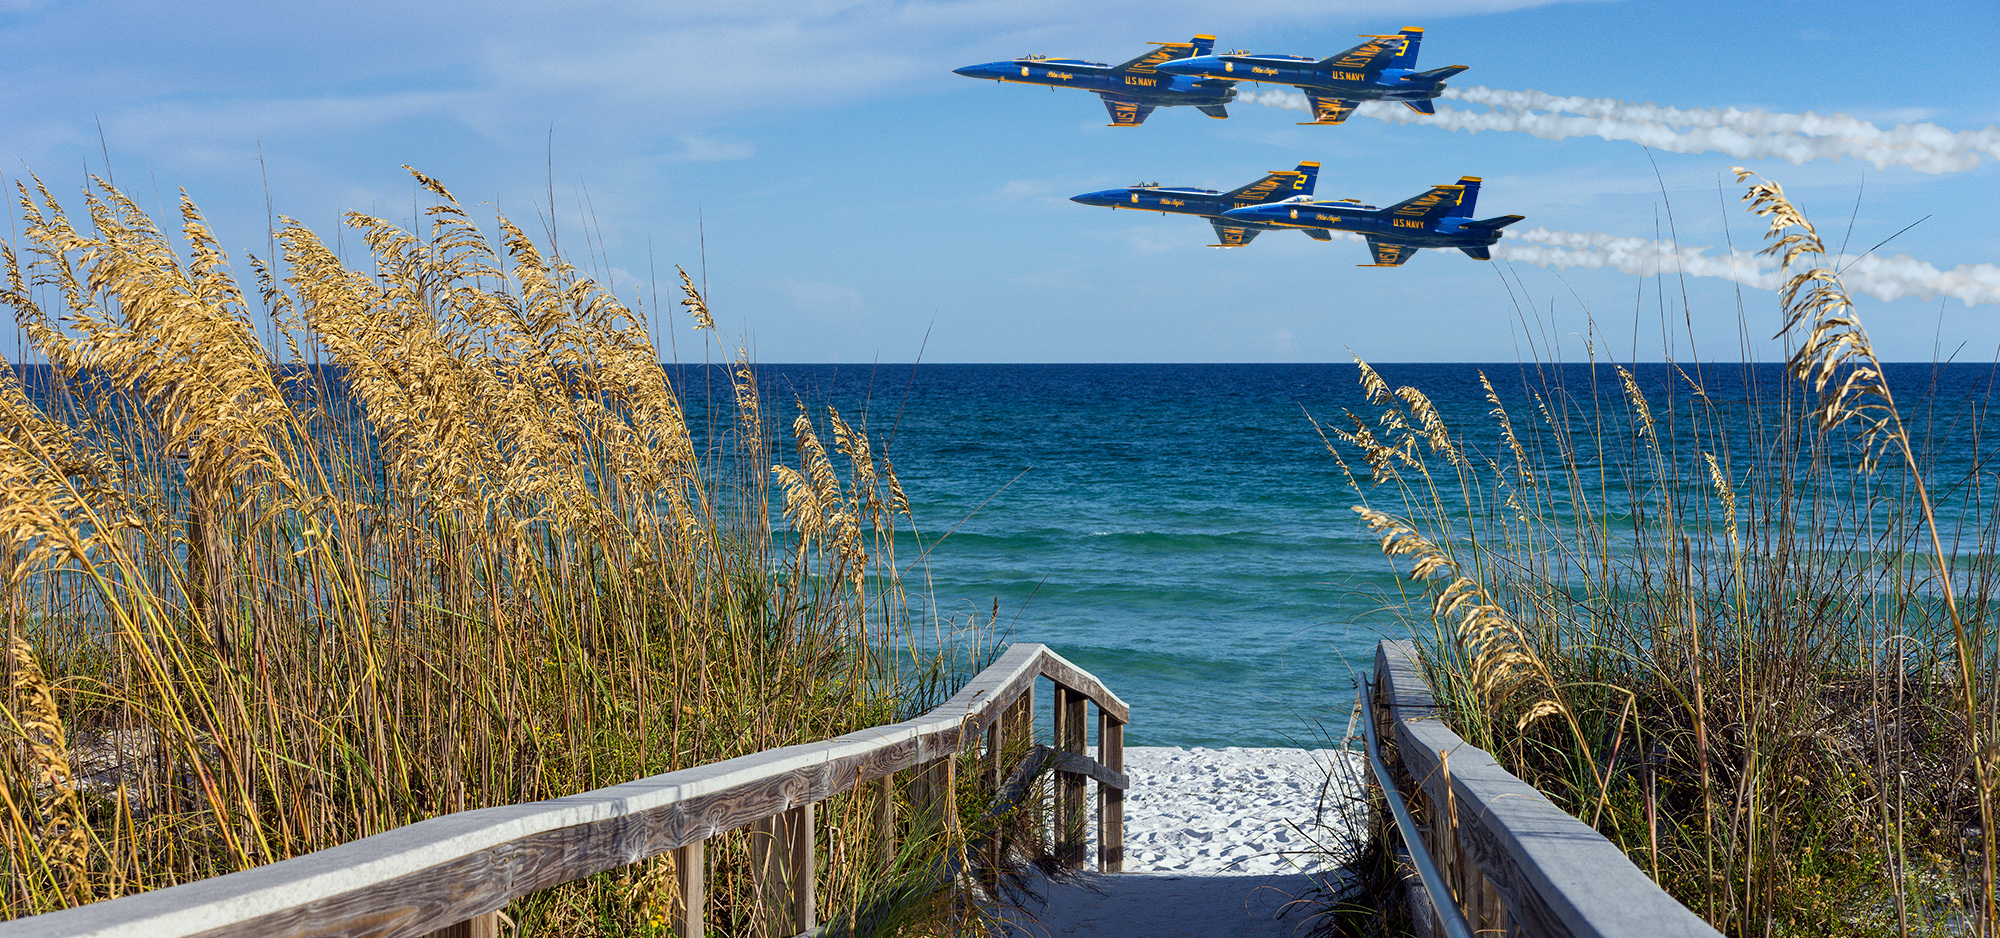 Blue angel planes flying over a beach boardwalk